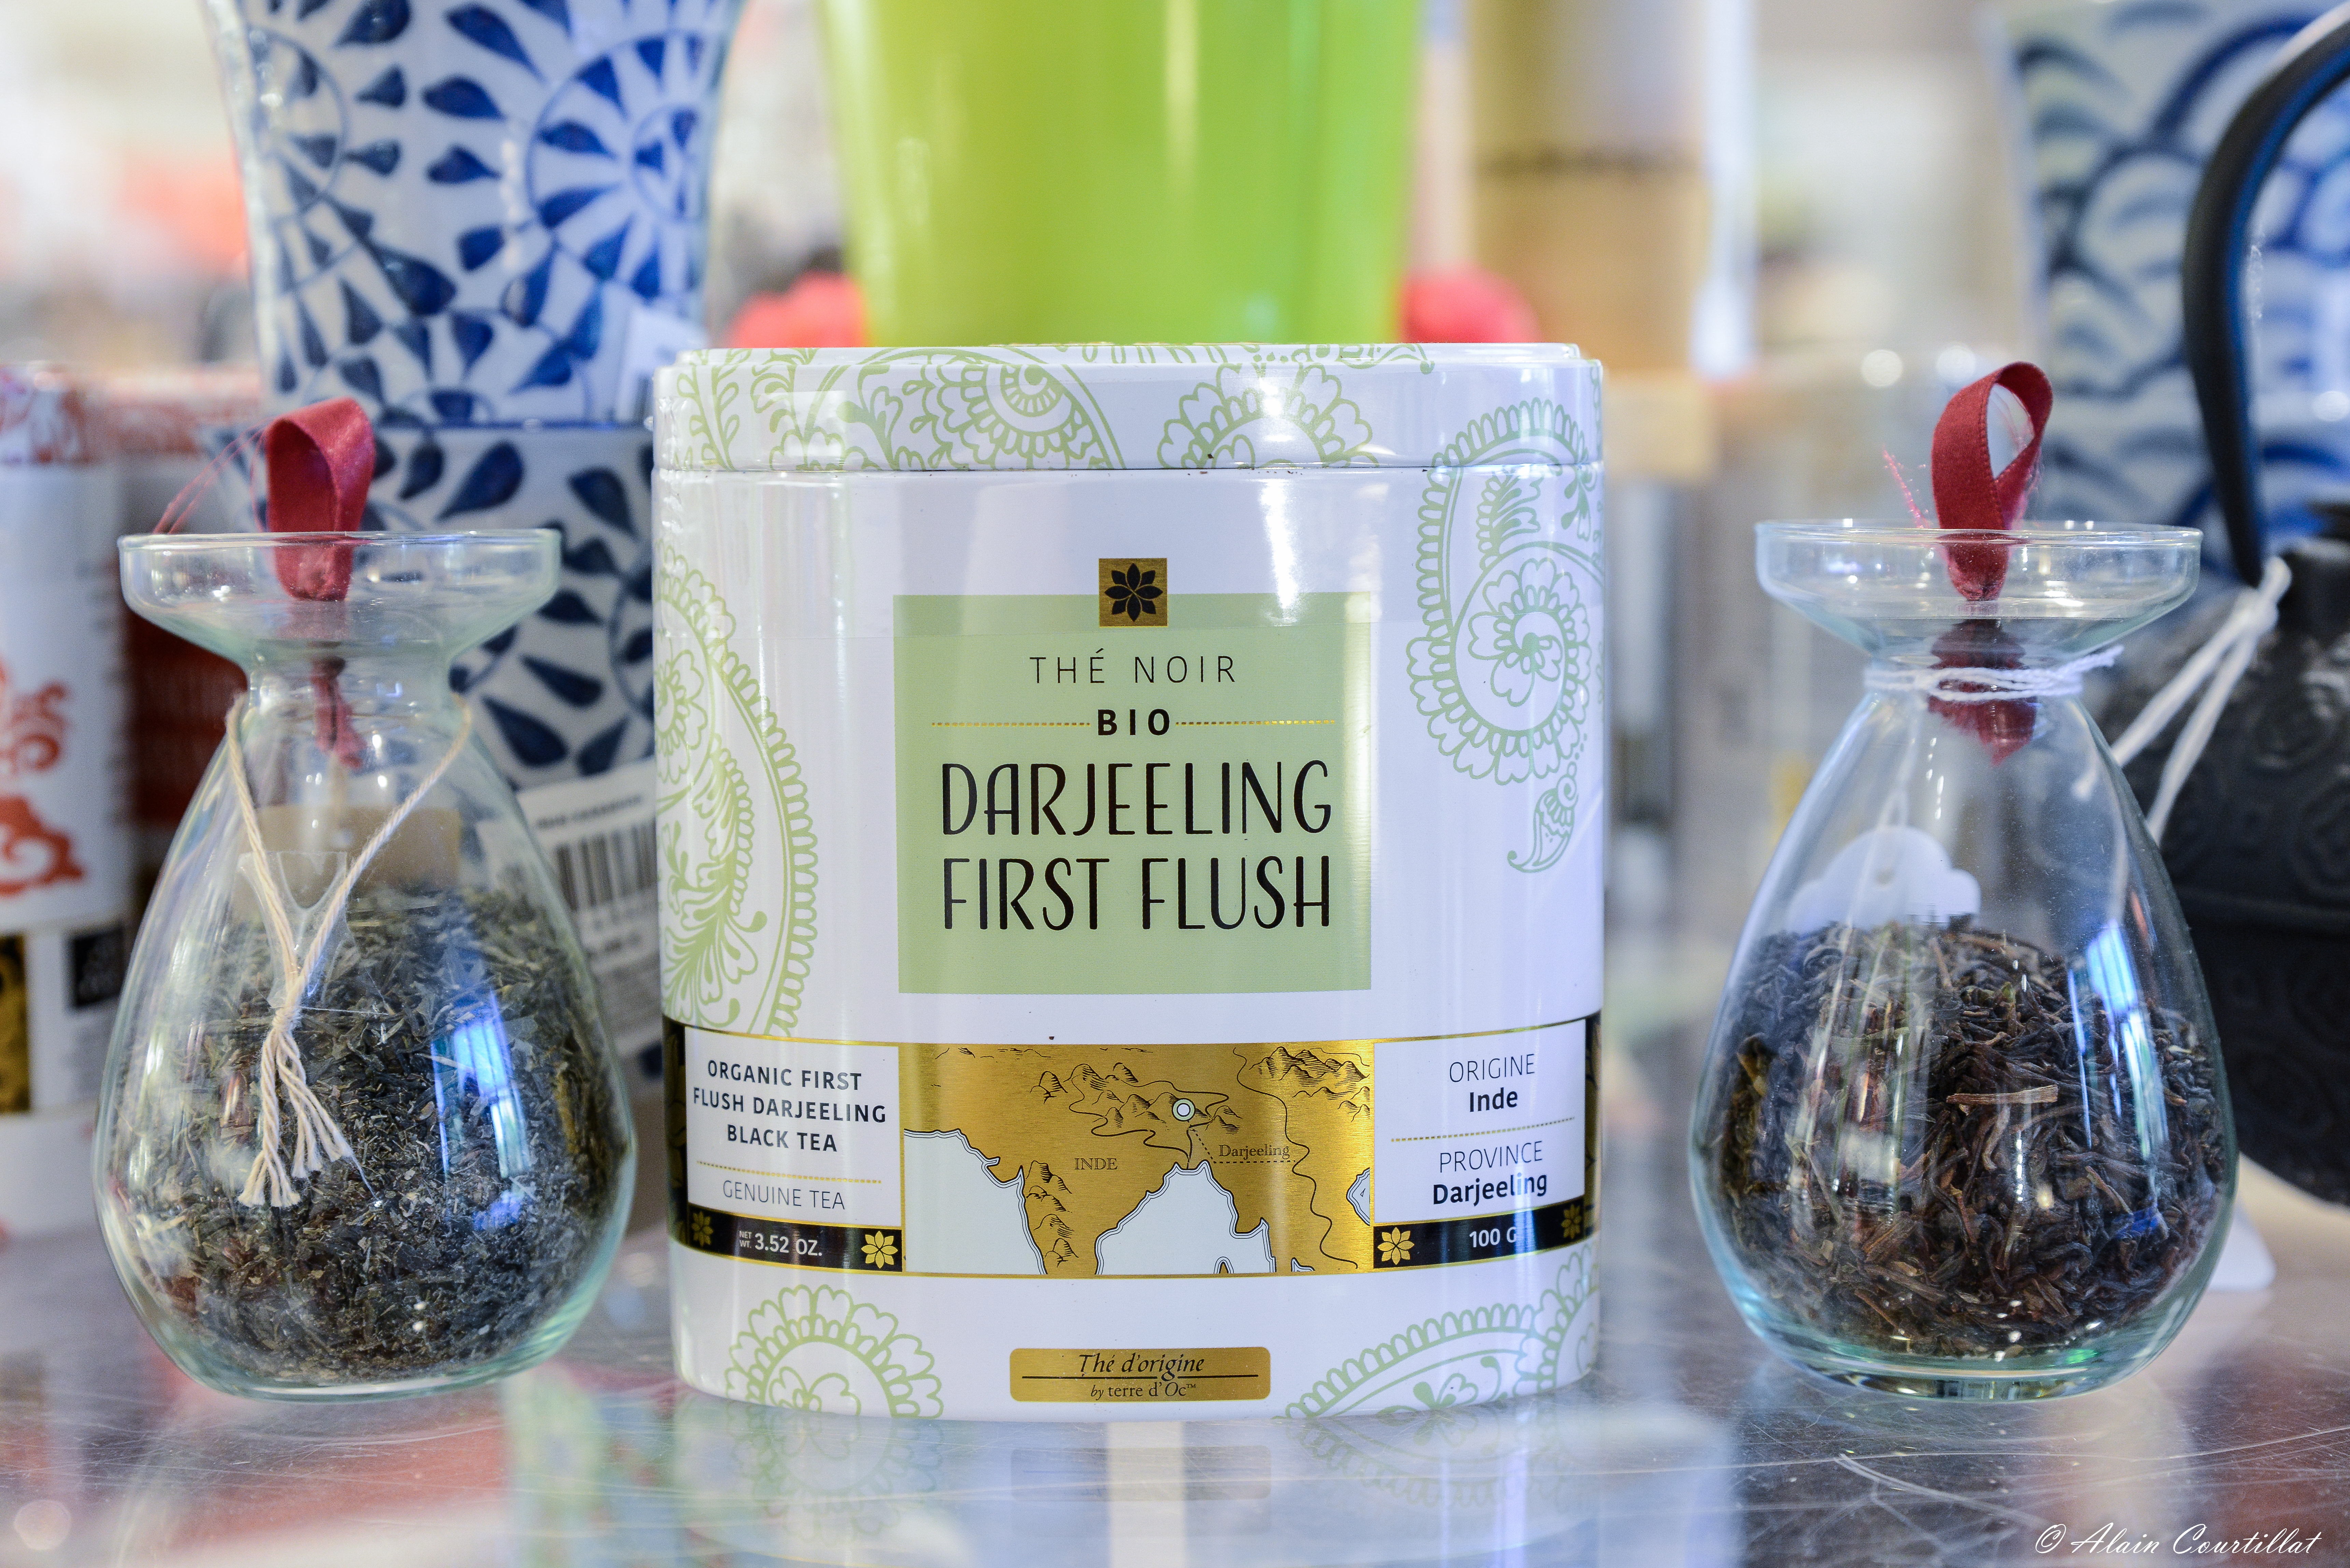 Black tea "Darjeeling First Flush" - Organic